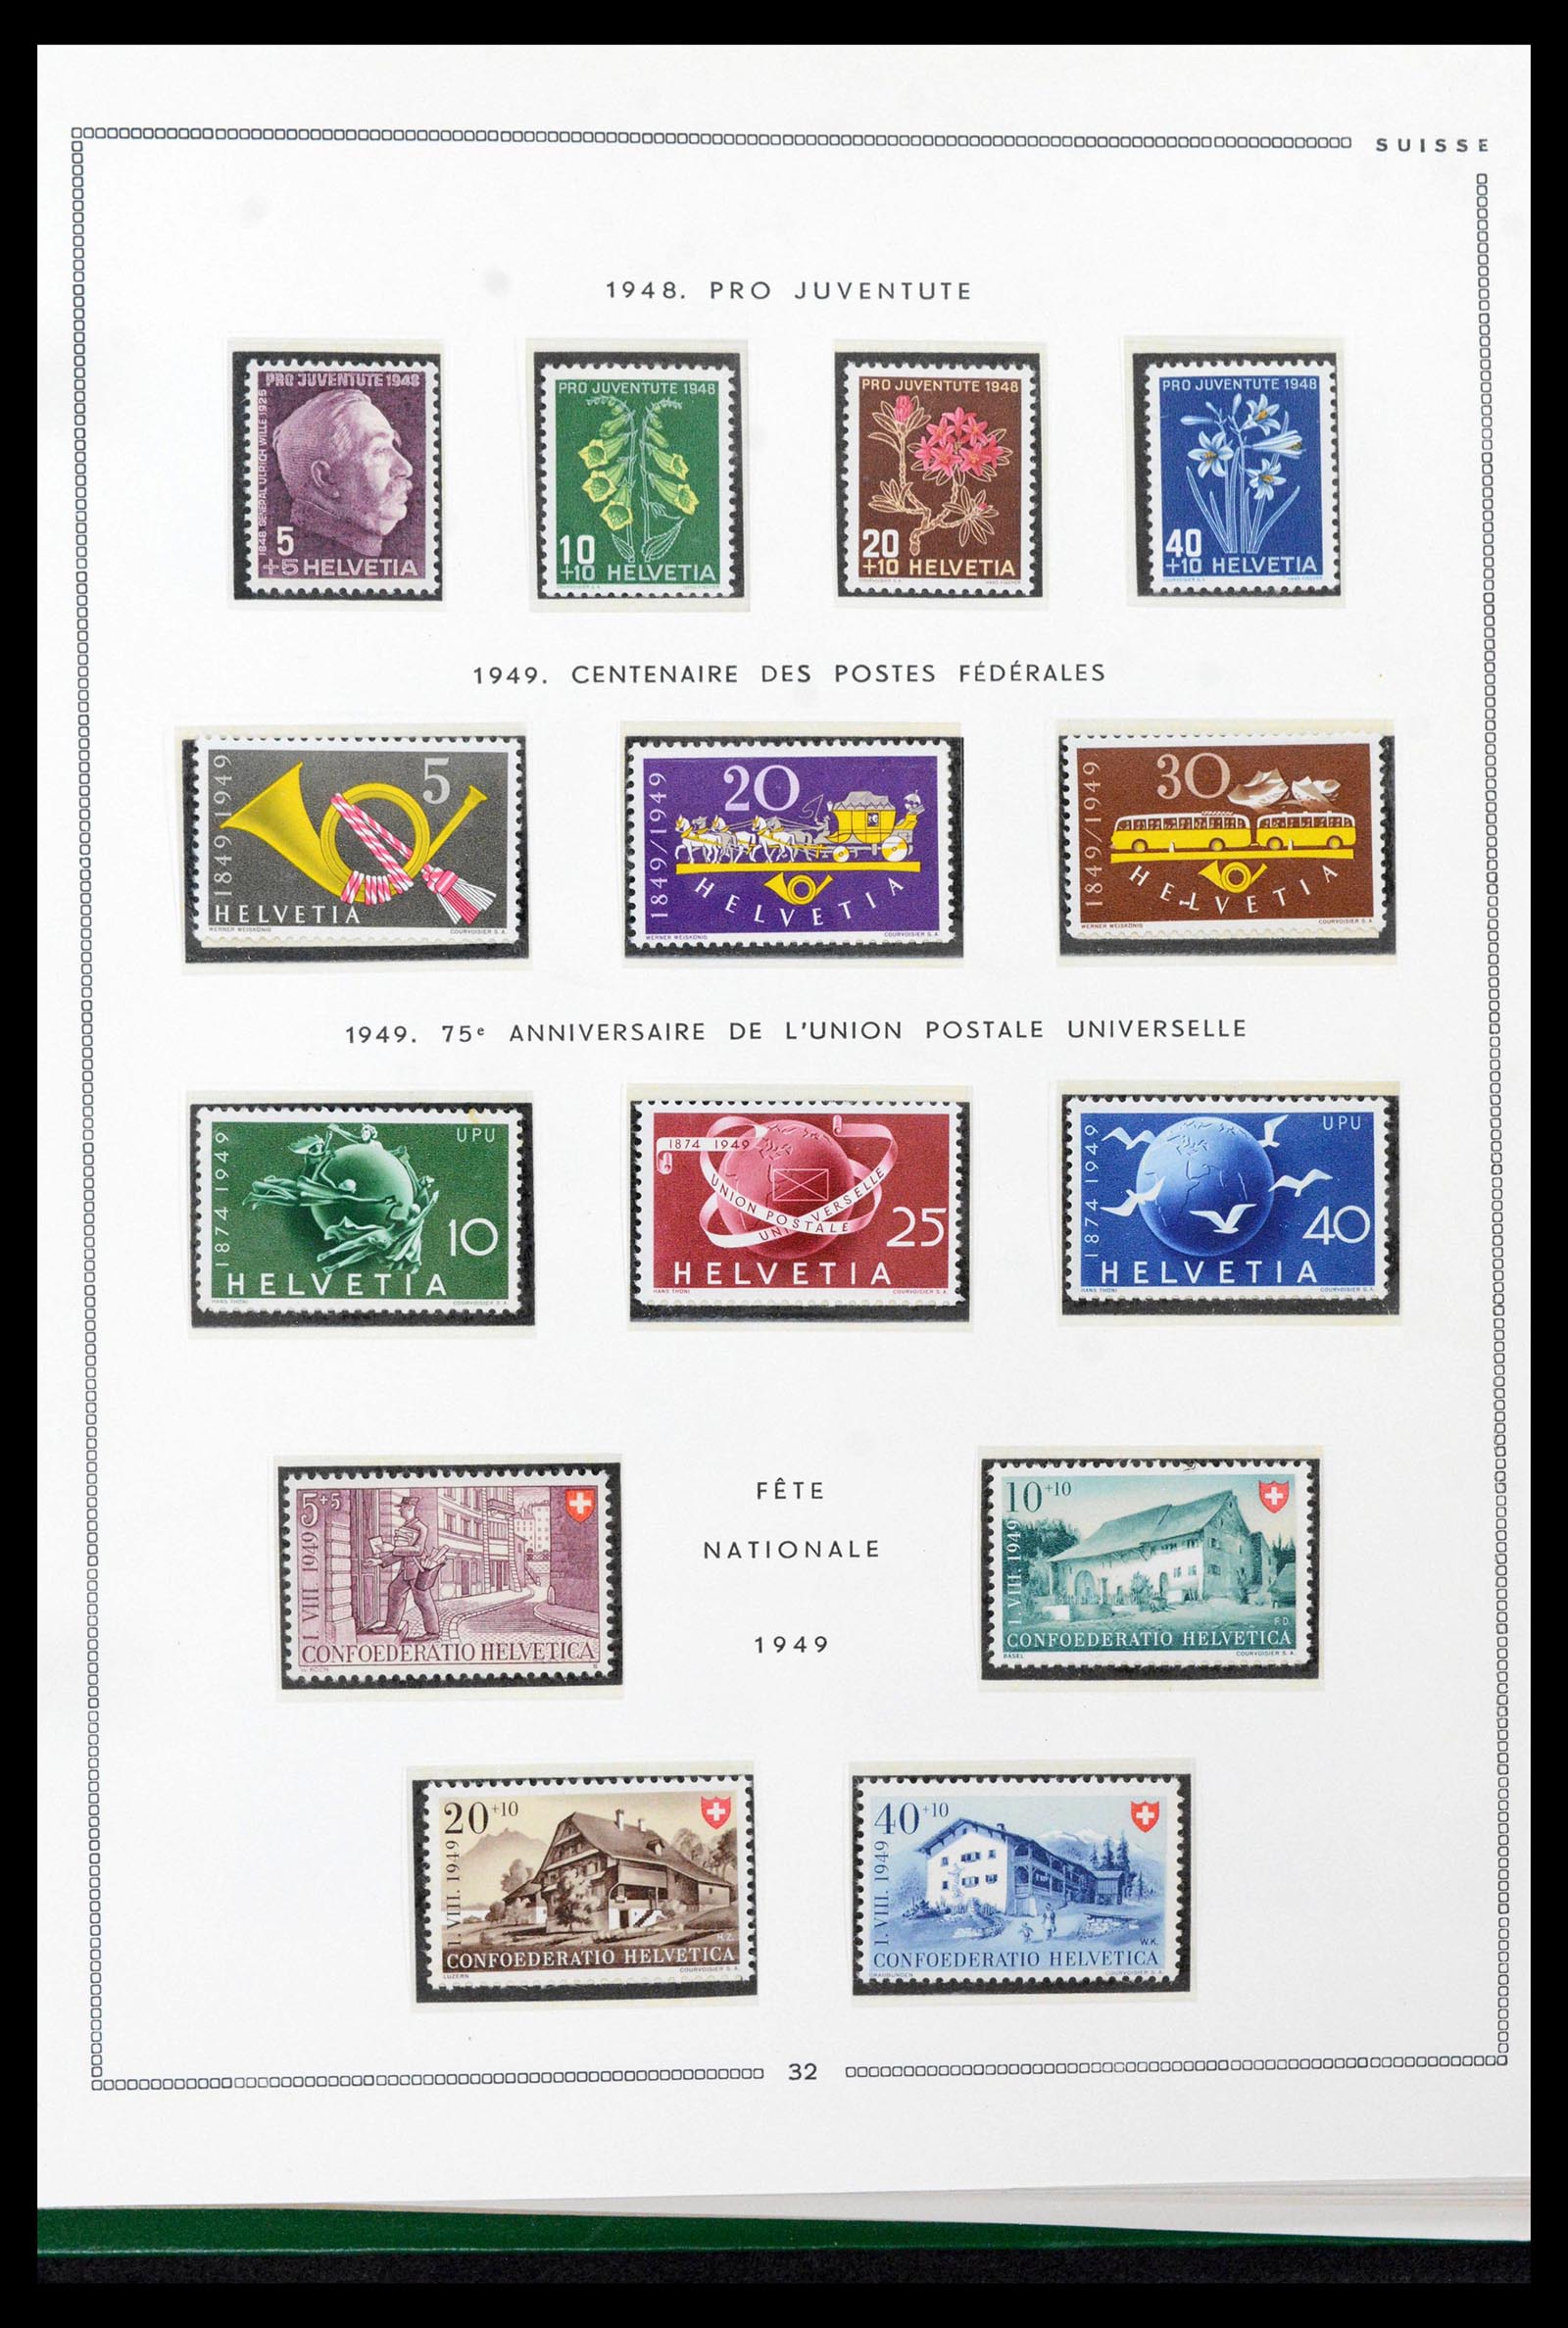 39096 0027 - Stamp collection 39096 Switzerland 1907-1963.